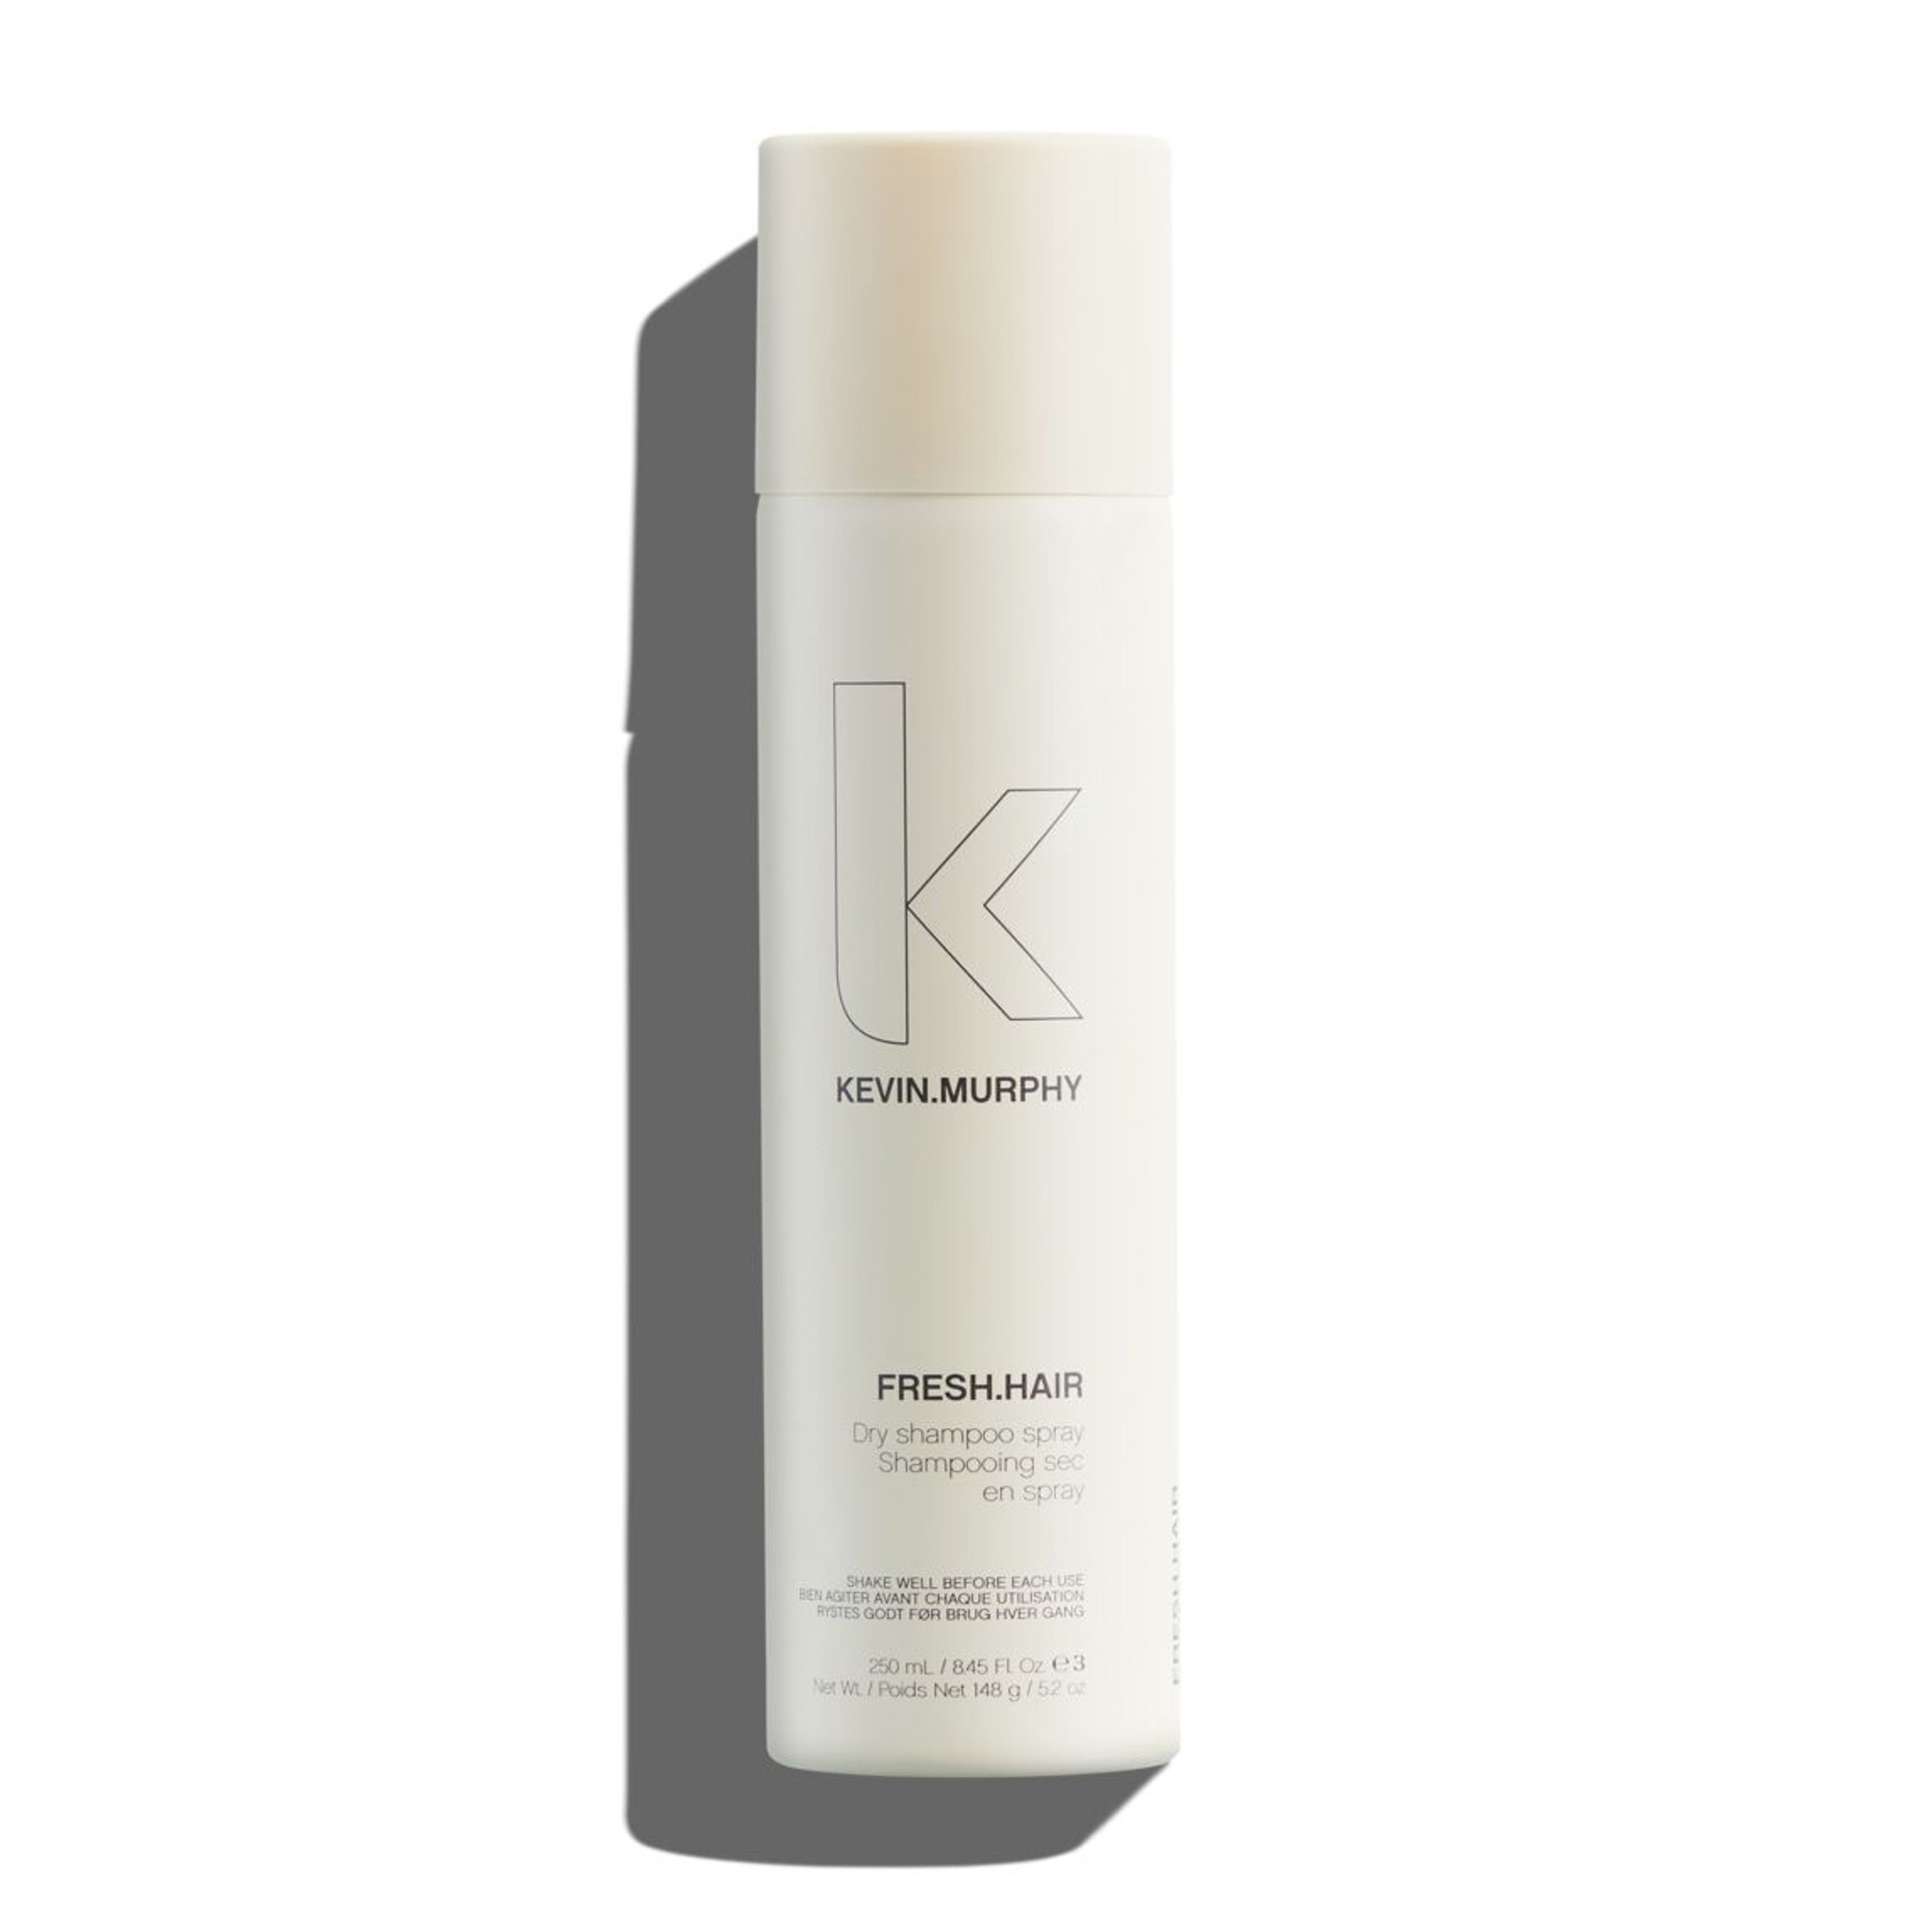 KEVIN.MURPHY Fresh.Hair Dry Cleaning Spray Shampoo